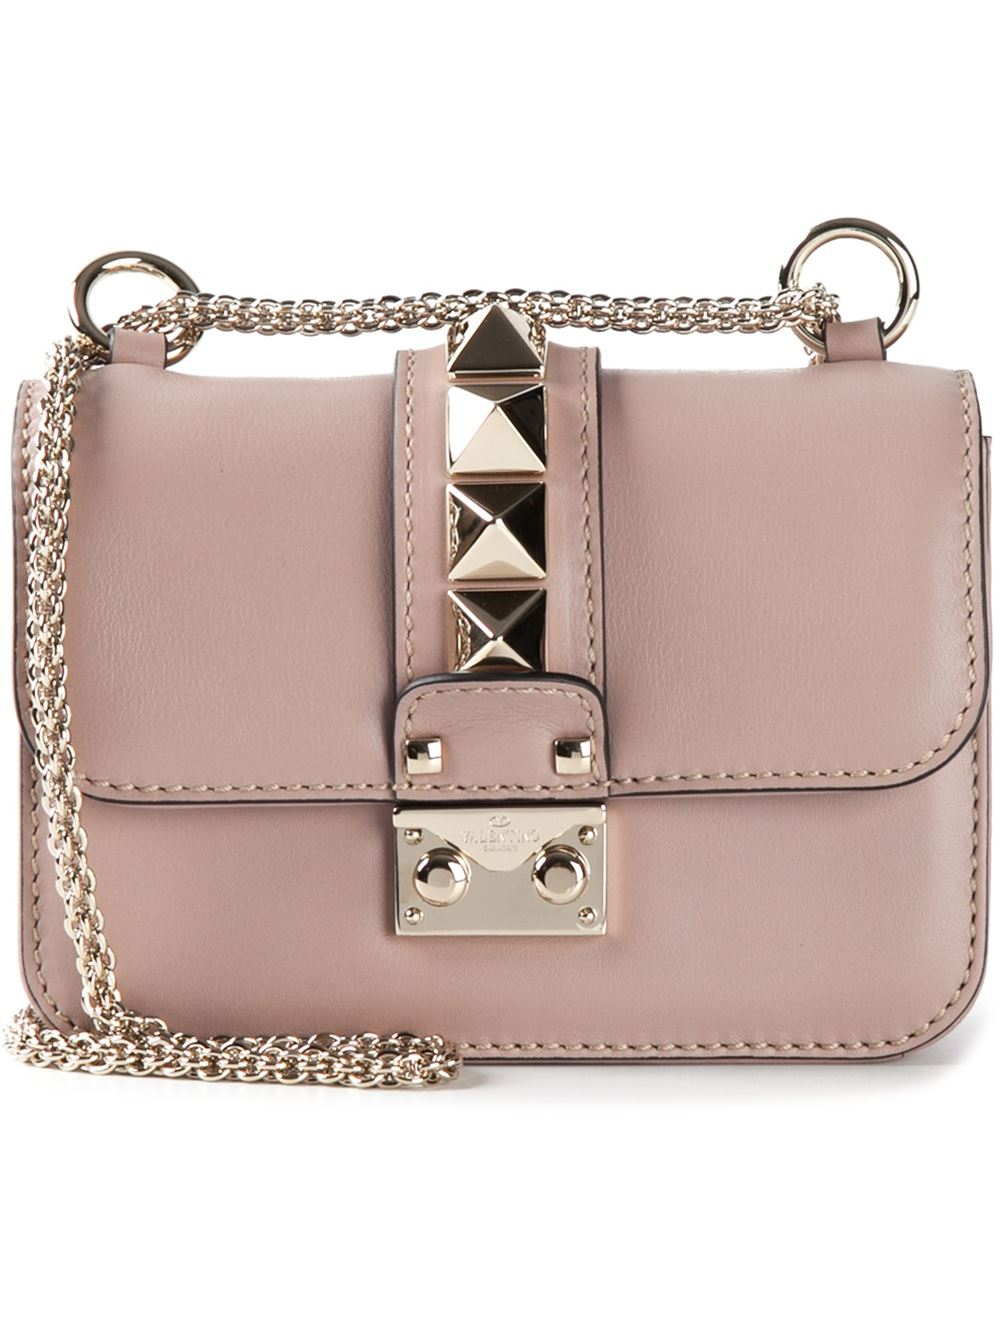 Valentino Glam Lock Leather Shoulder Bag in Natural | Lyst